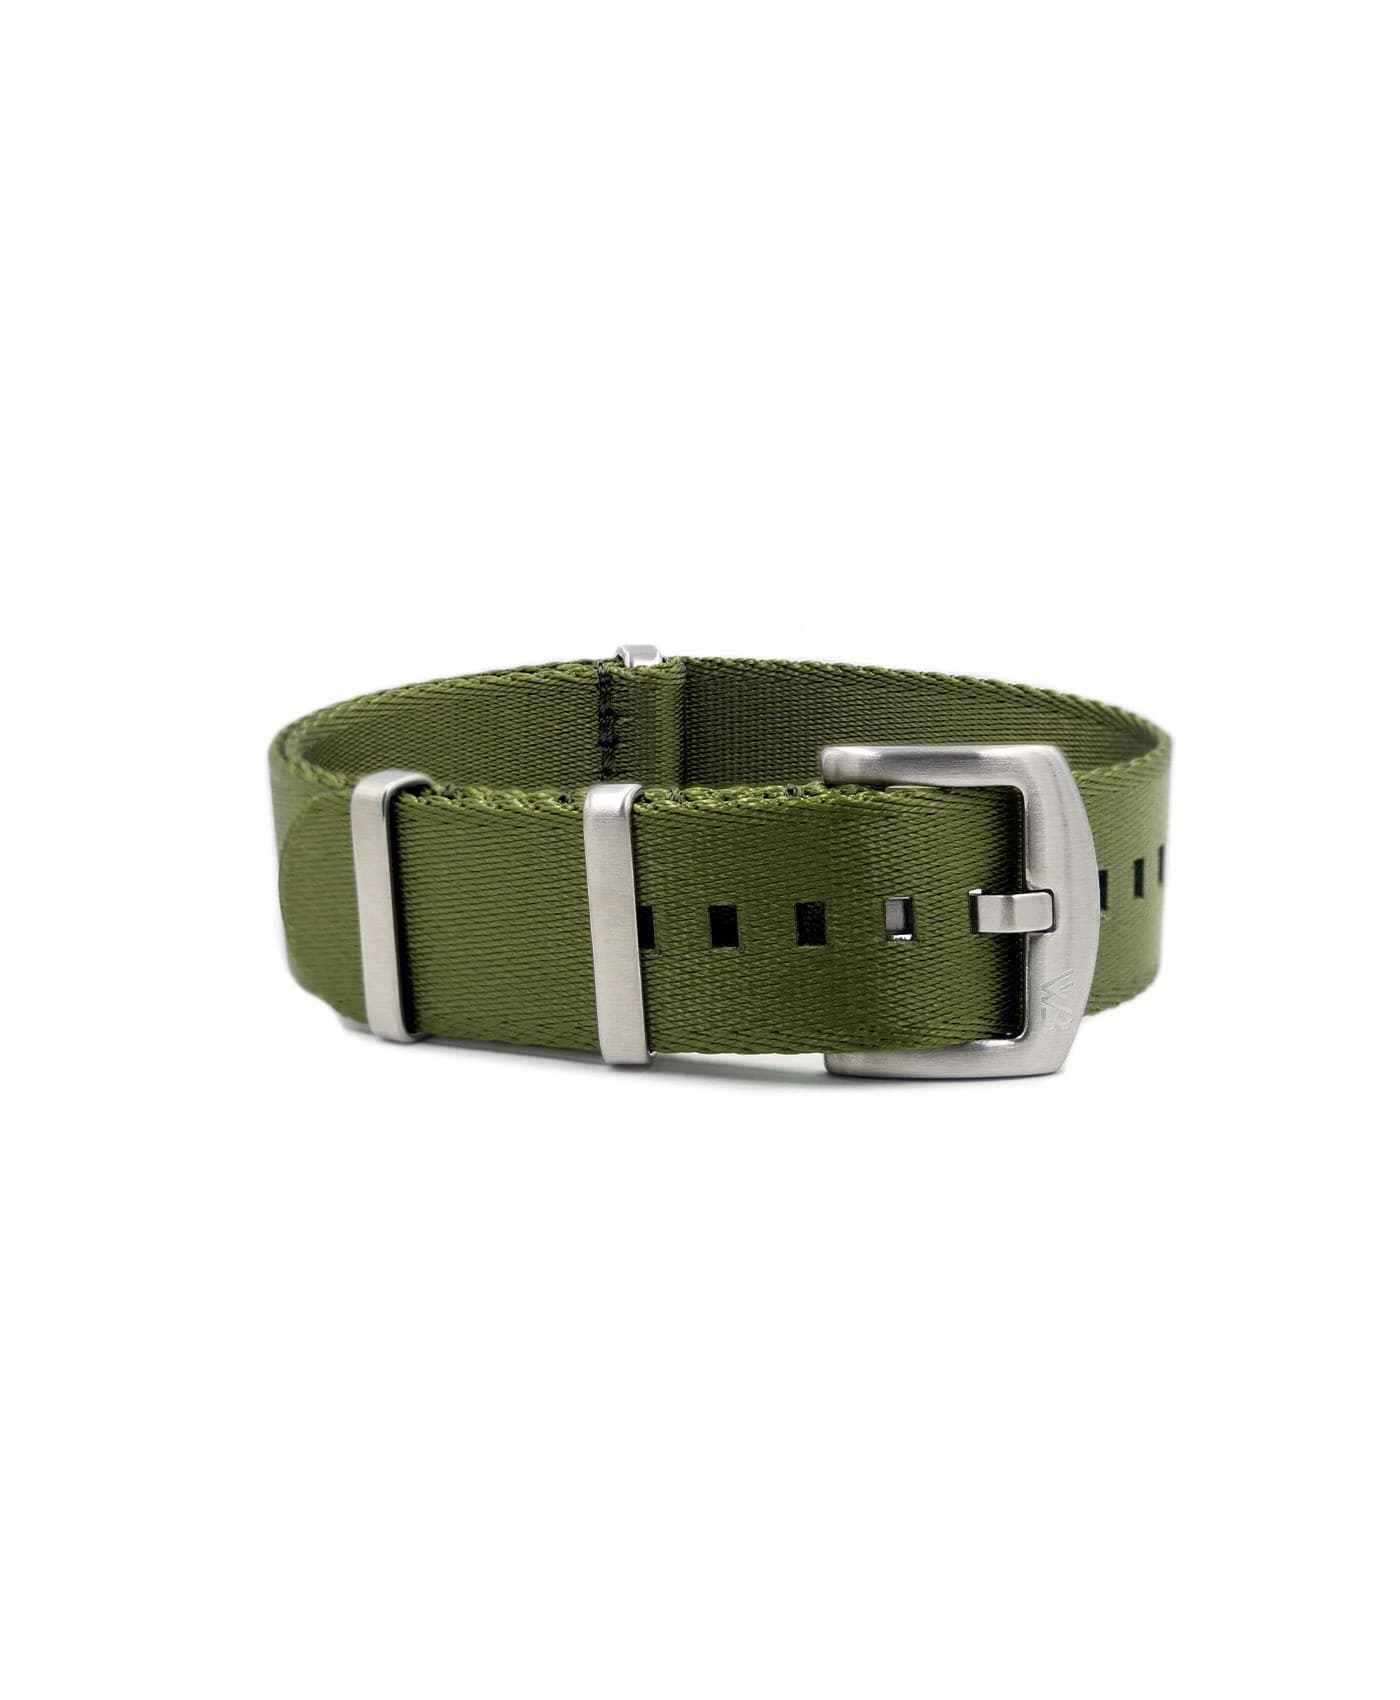 WB_premium_Nato-straps brushed_military-green_front